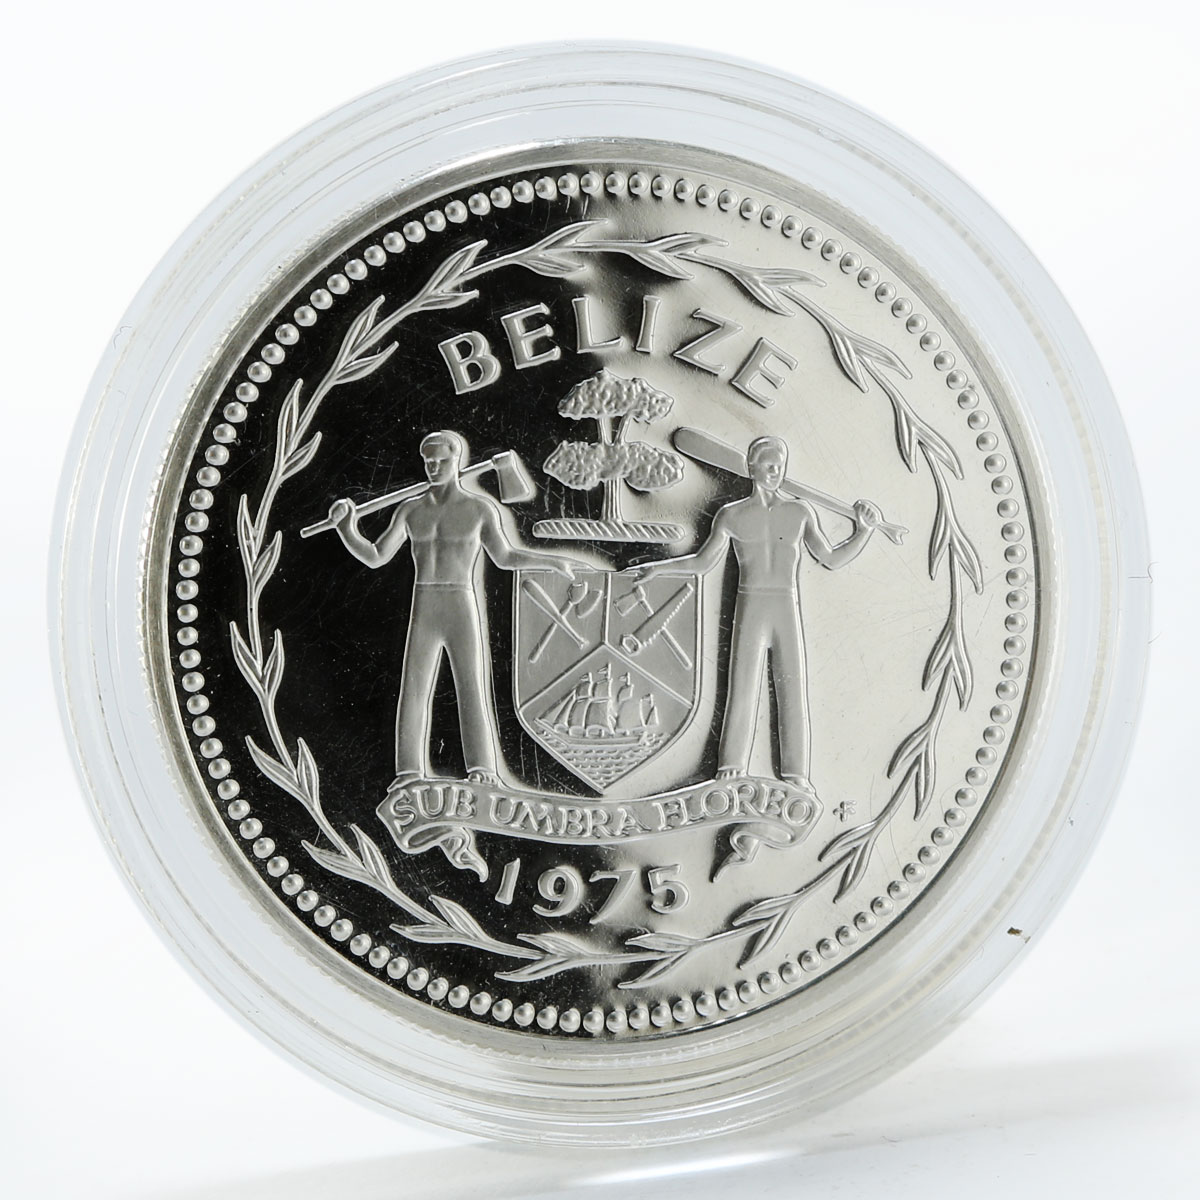 Belize 1 dollar Scarlet Macaw bird silver coin 1975